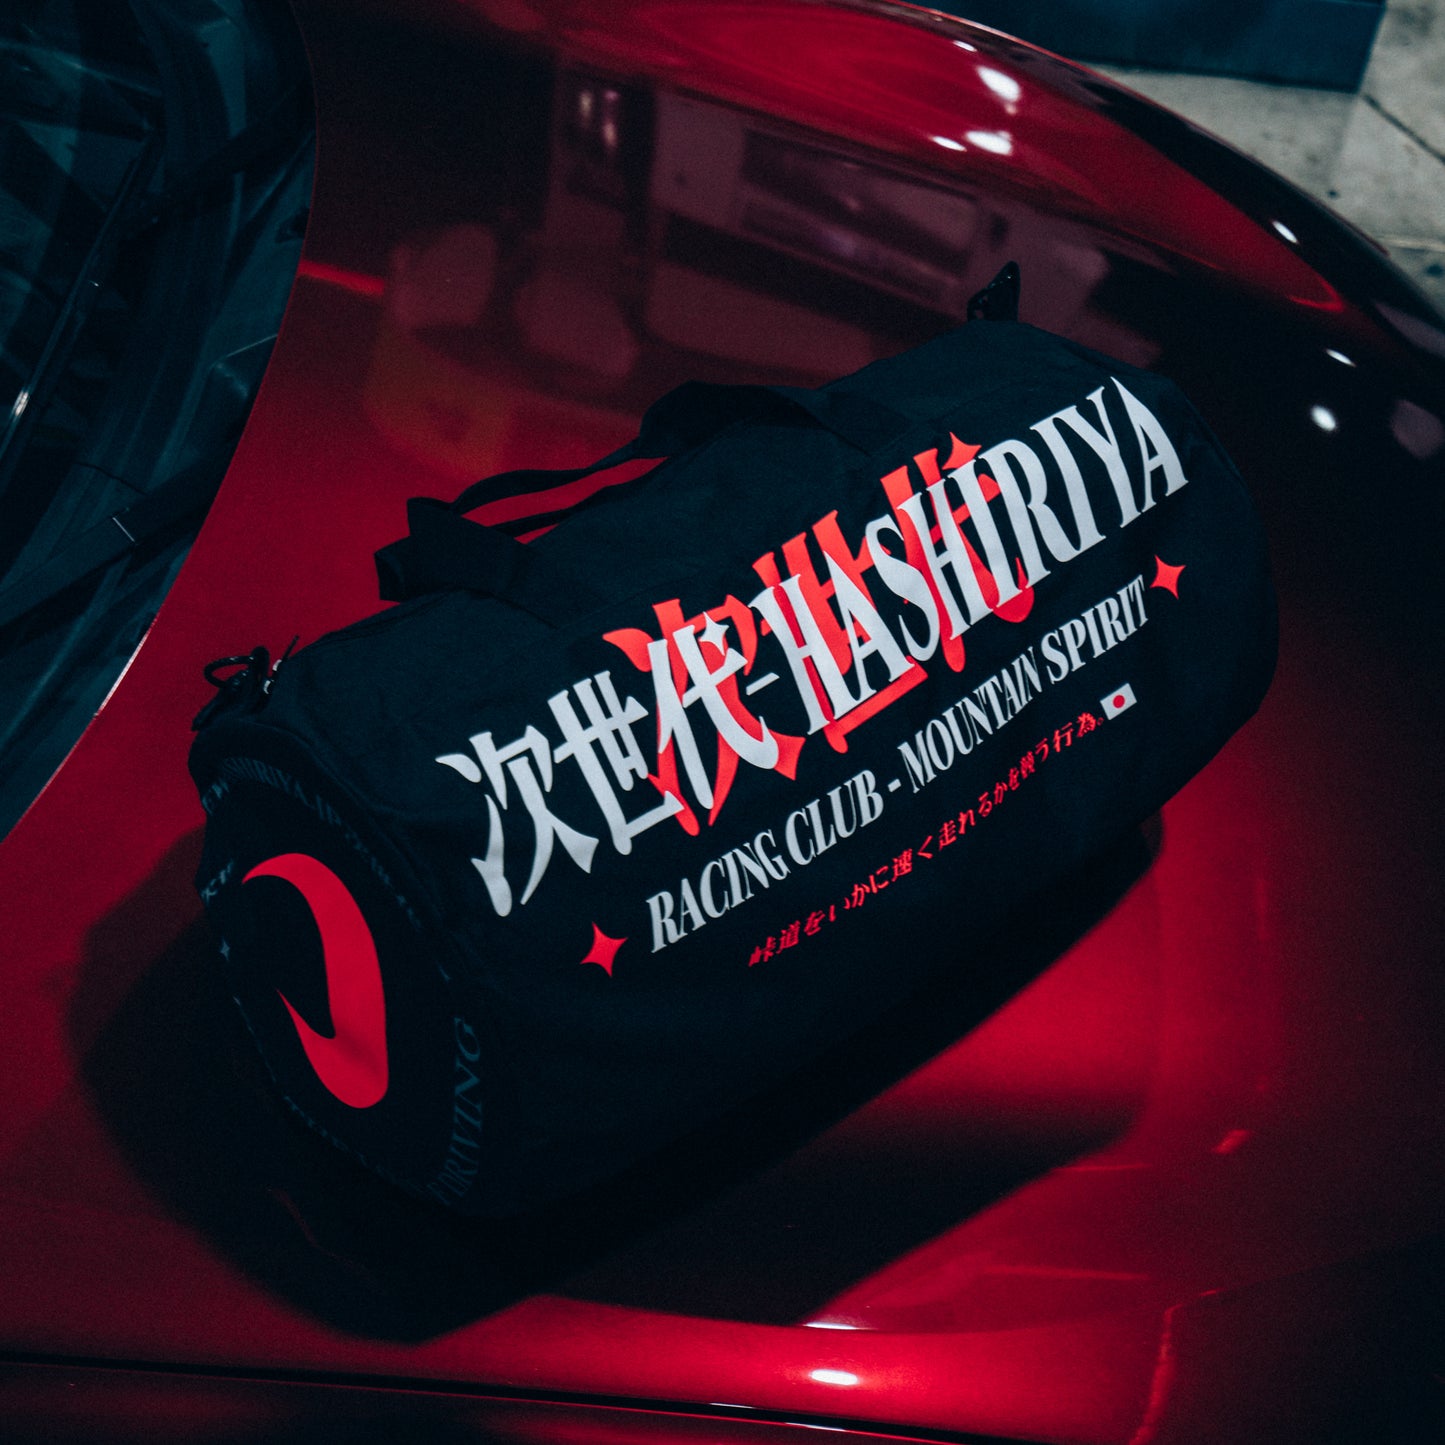 [𝙎𝙊𝙇𝘿 𝙊𝙐𝙏] Hashiriya Racing Club Limited Duffel Bag